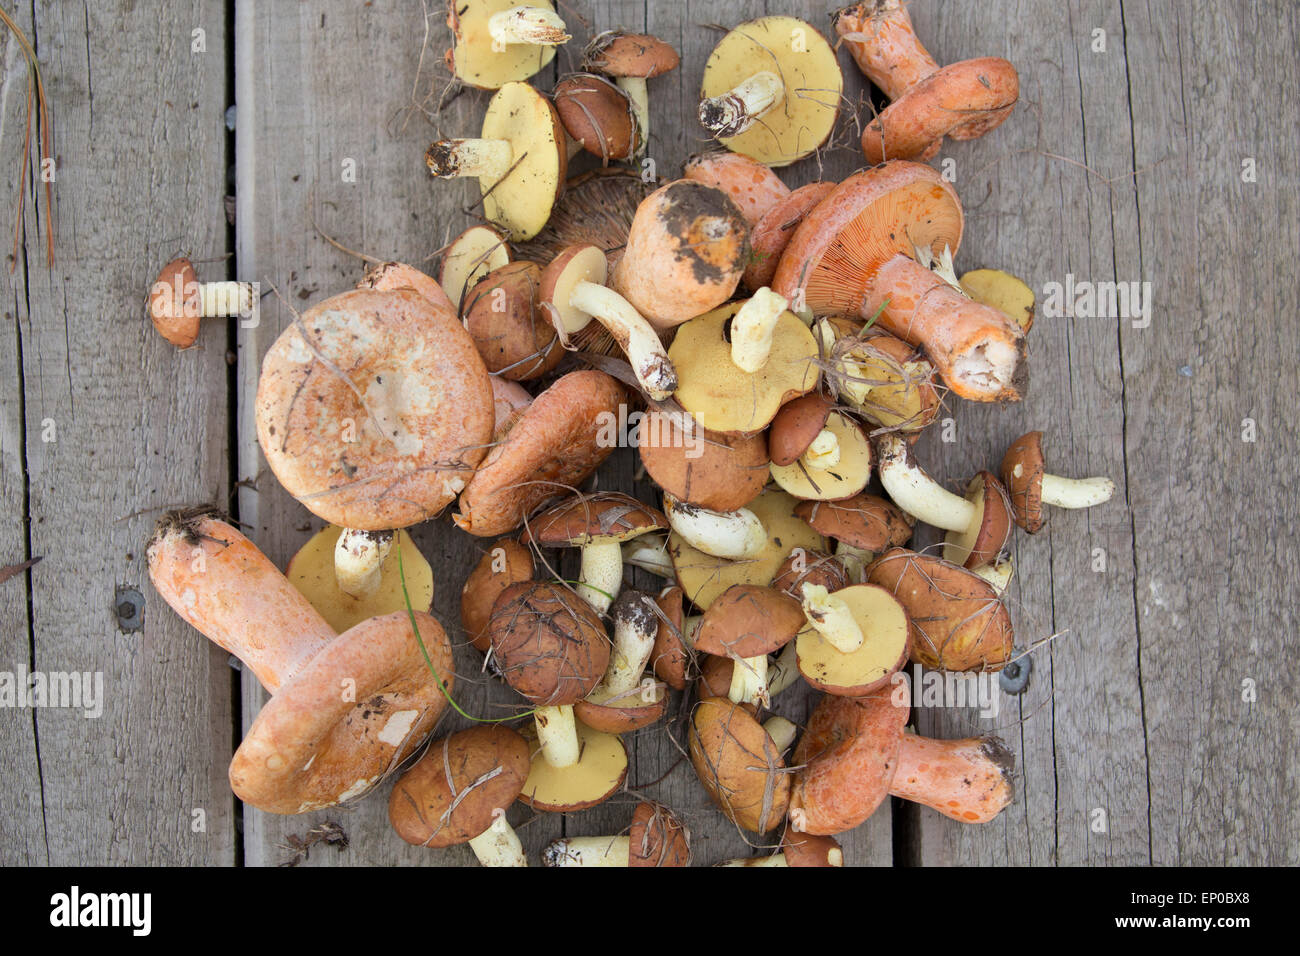 Forest mushroom Stock Photo